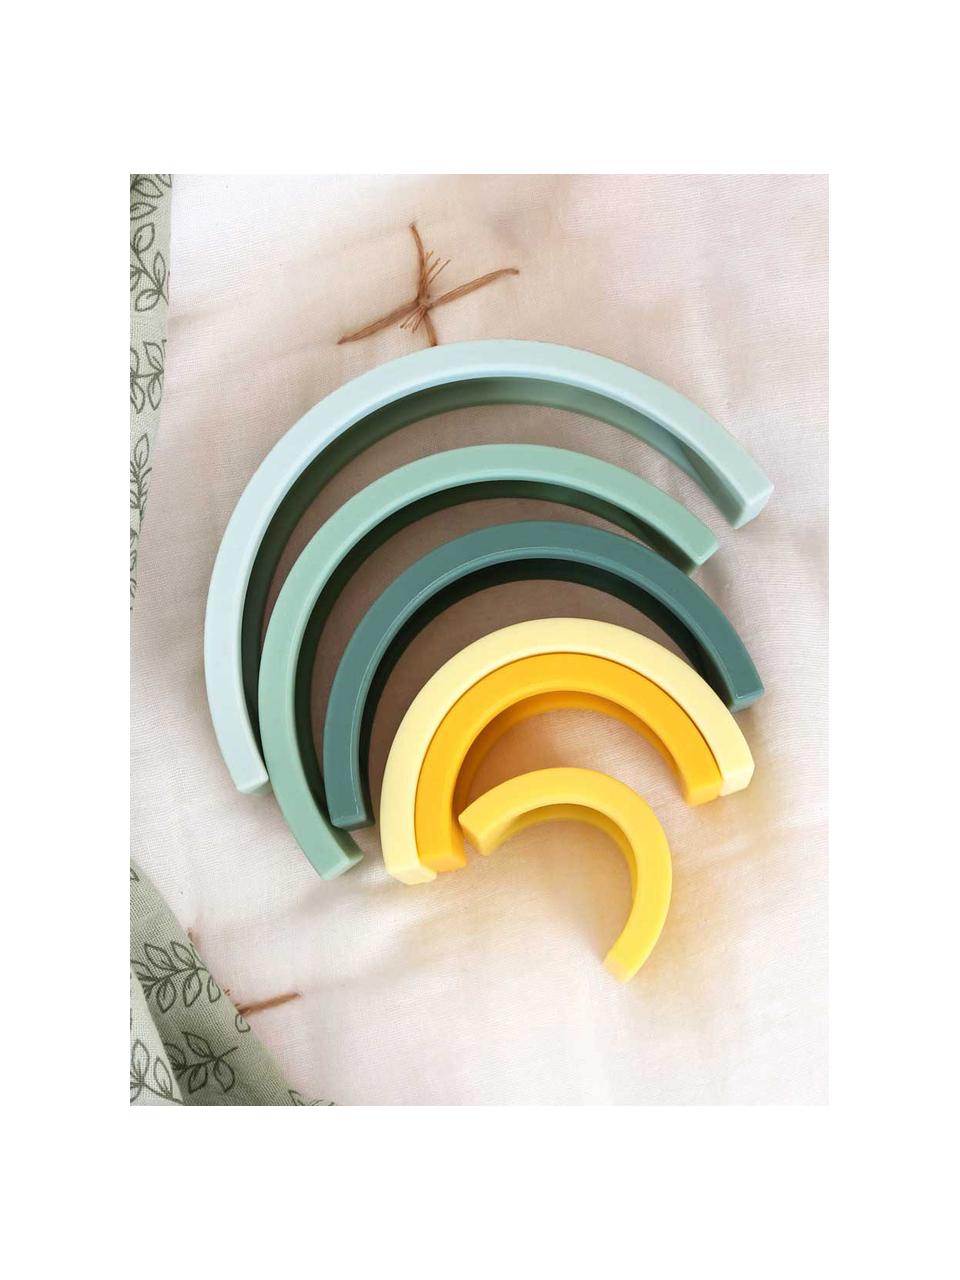 Stapelspielzeug Rainbow, Silikon, Grün- und Gelbtöne, B 15 x H 7 cm